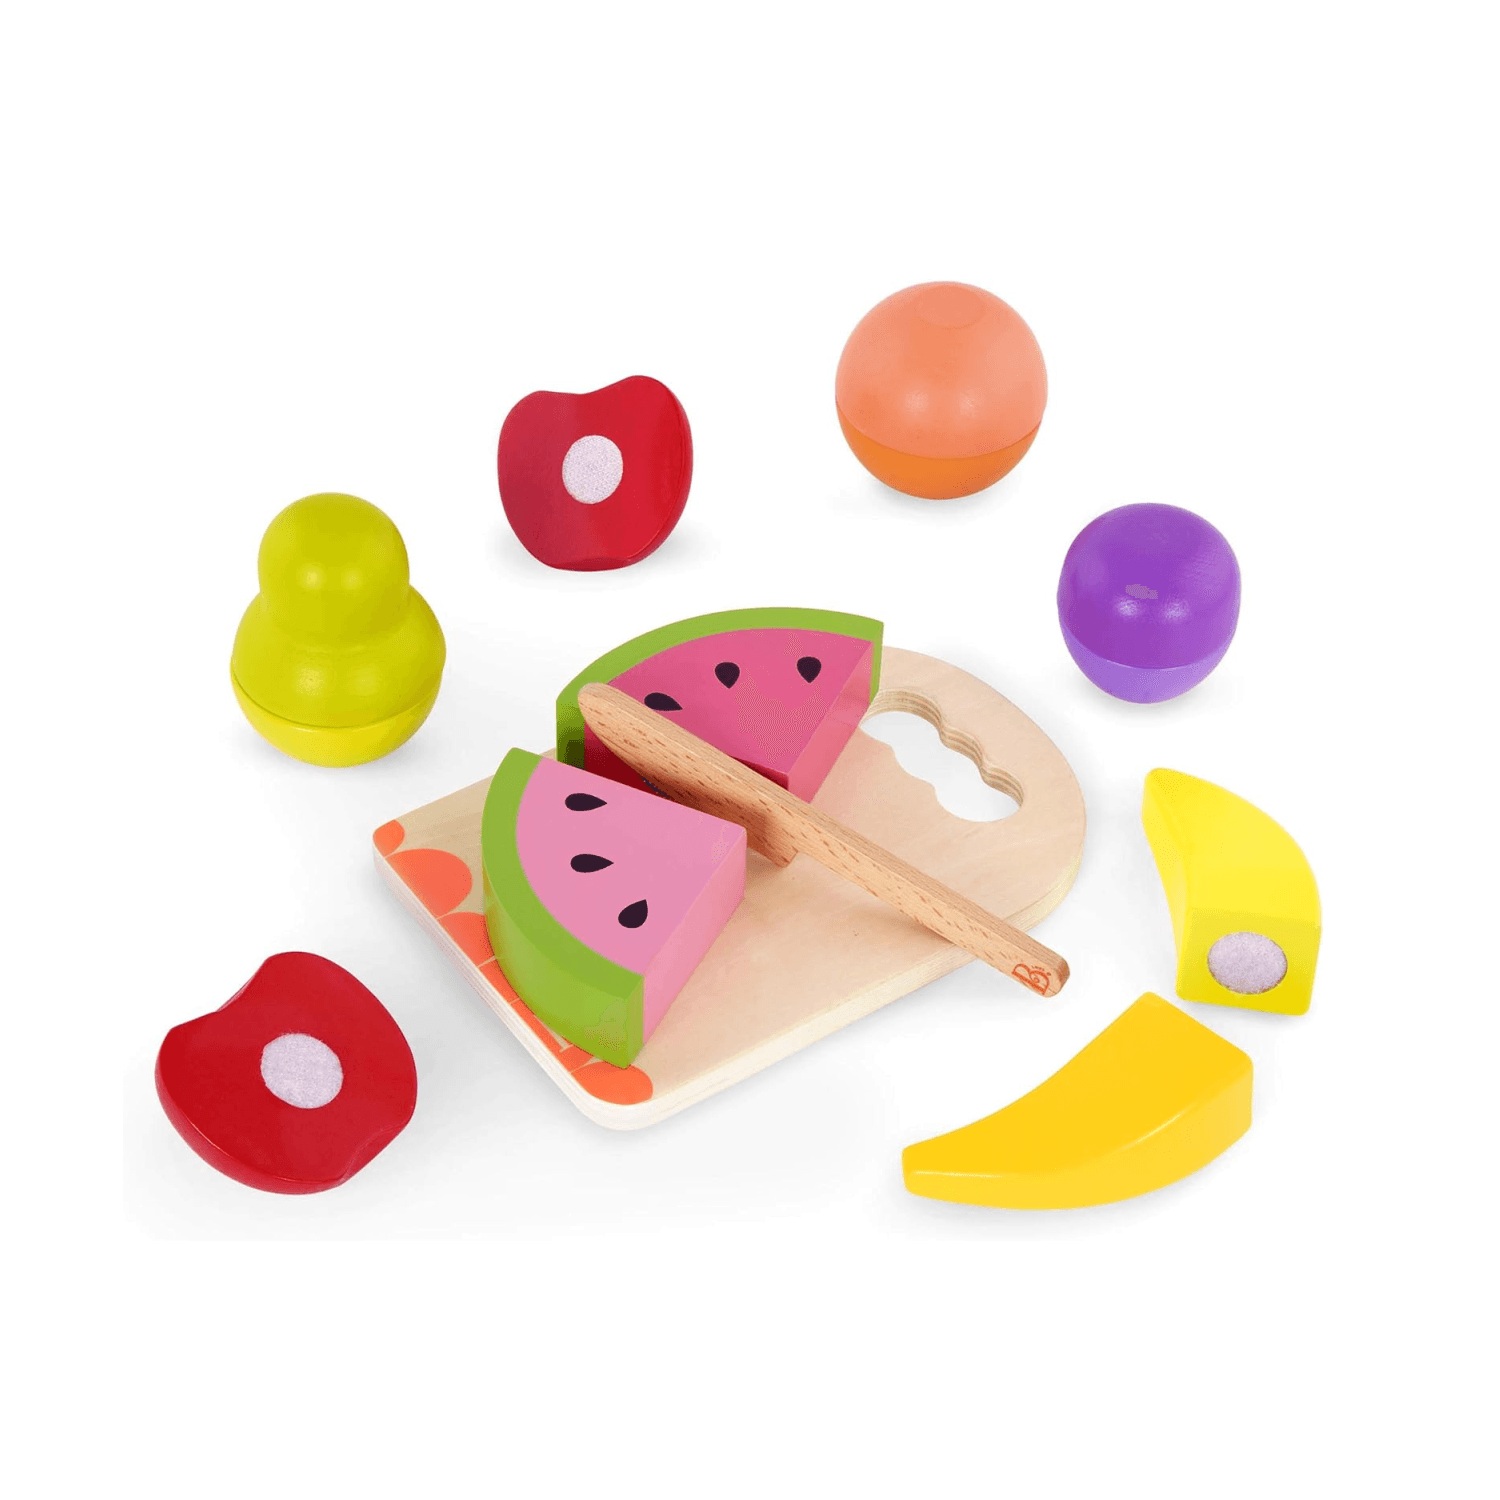 Montessori b toys fruit cutting